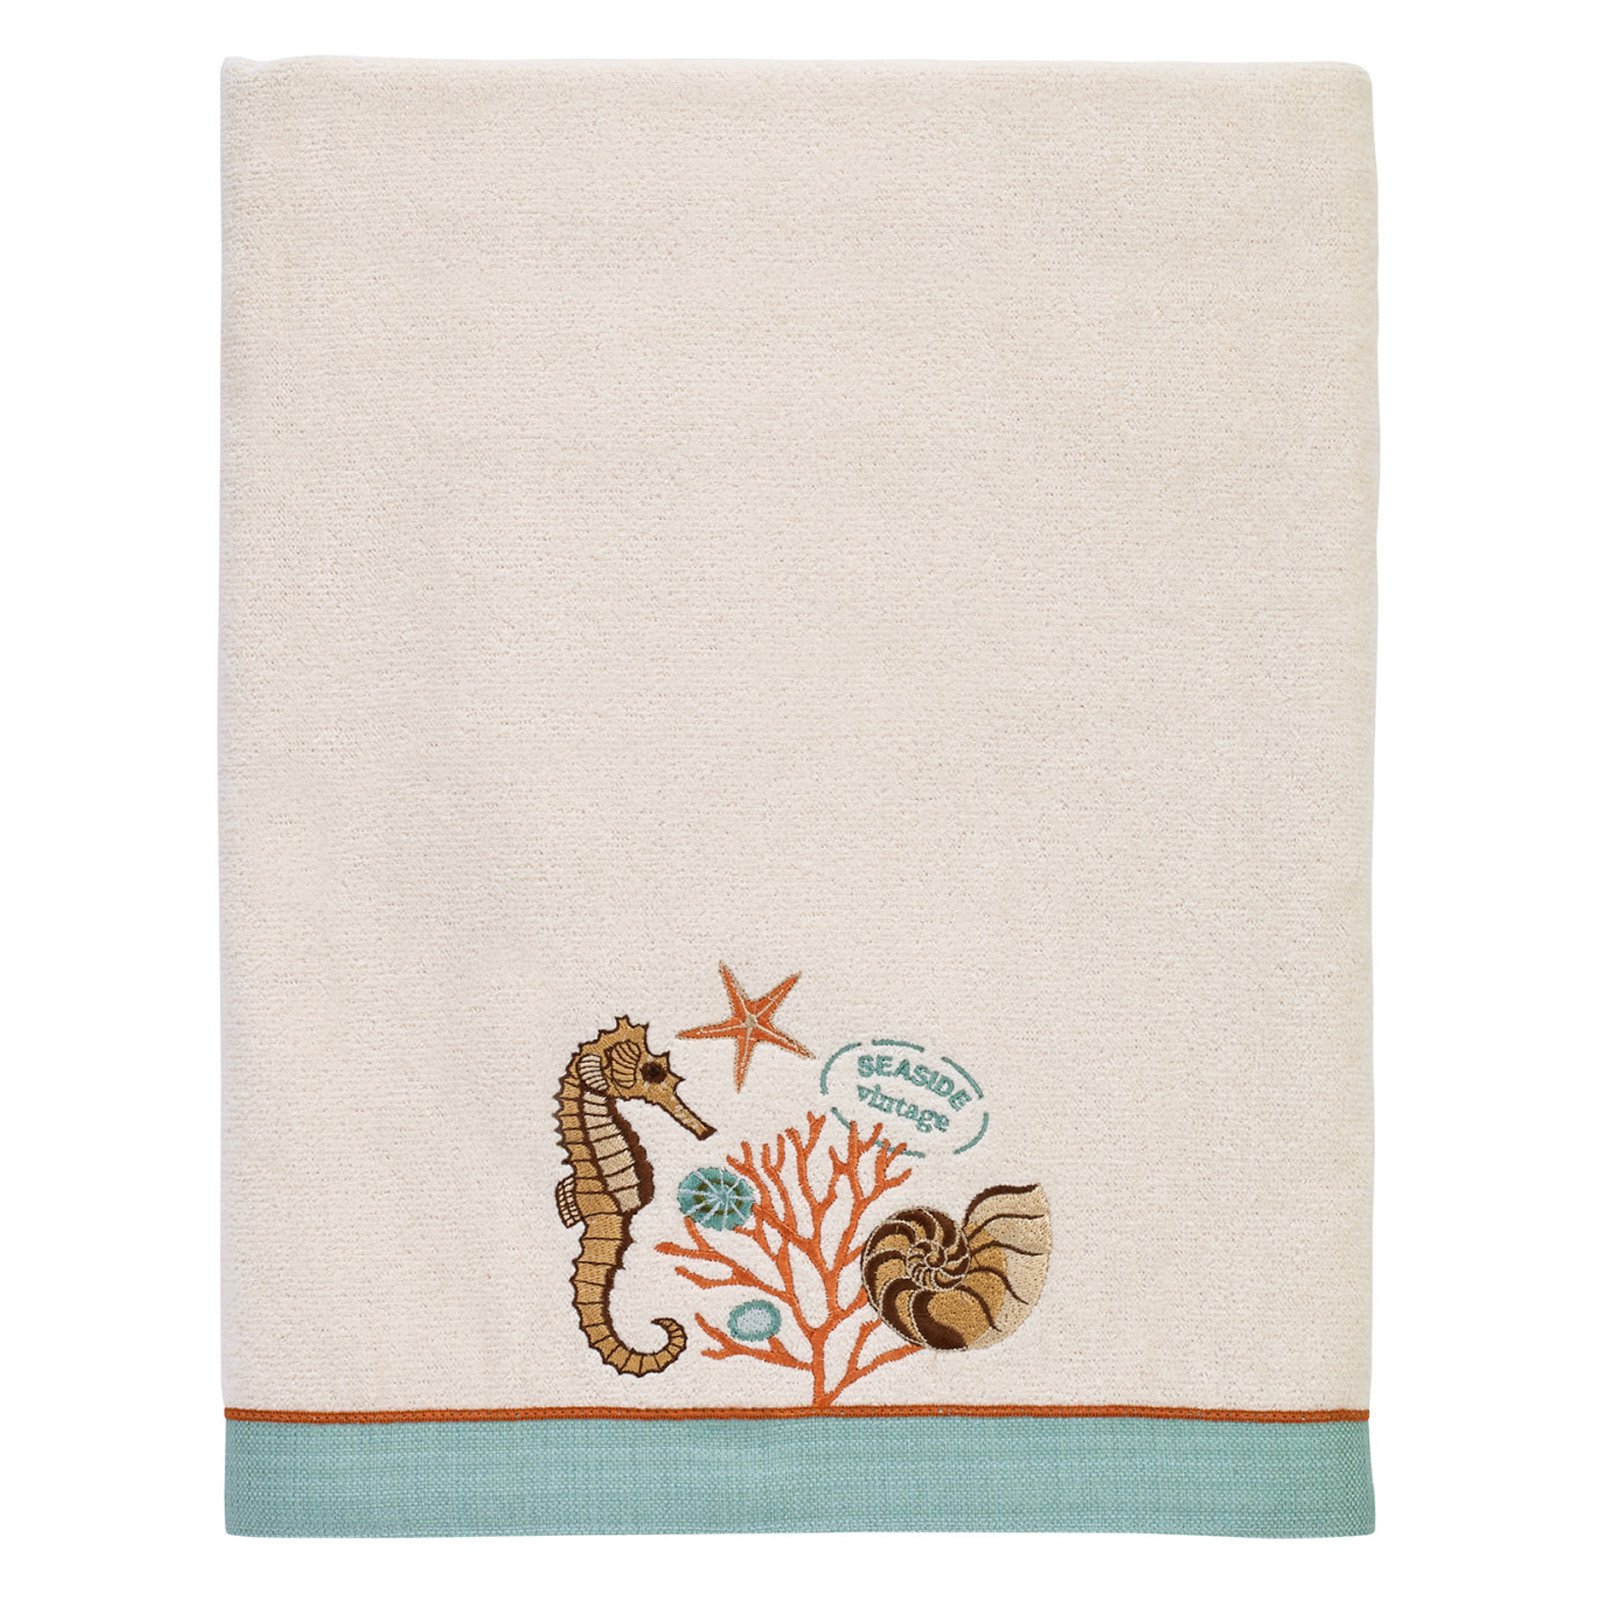 Seaside Vintage Embroidered Bath Towel - Ivory - image 1 of 2